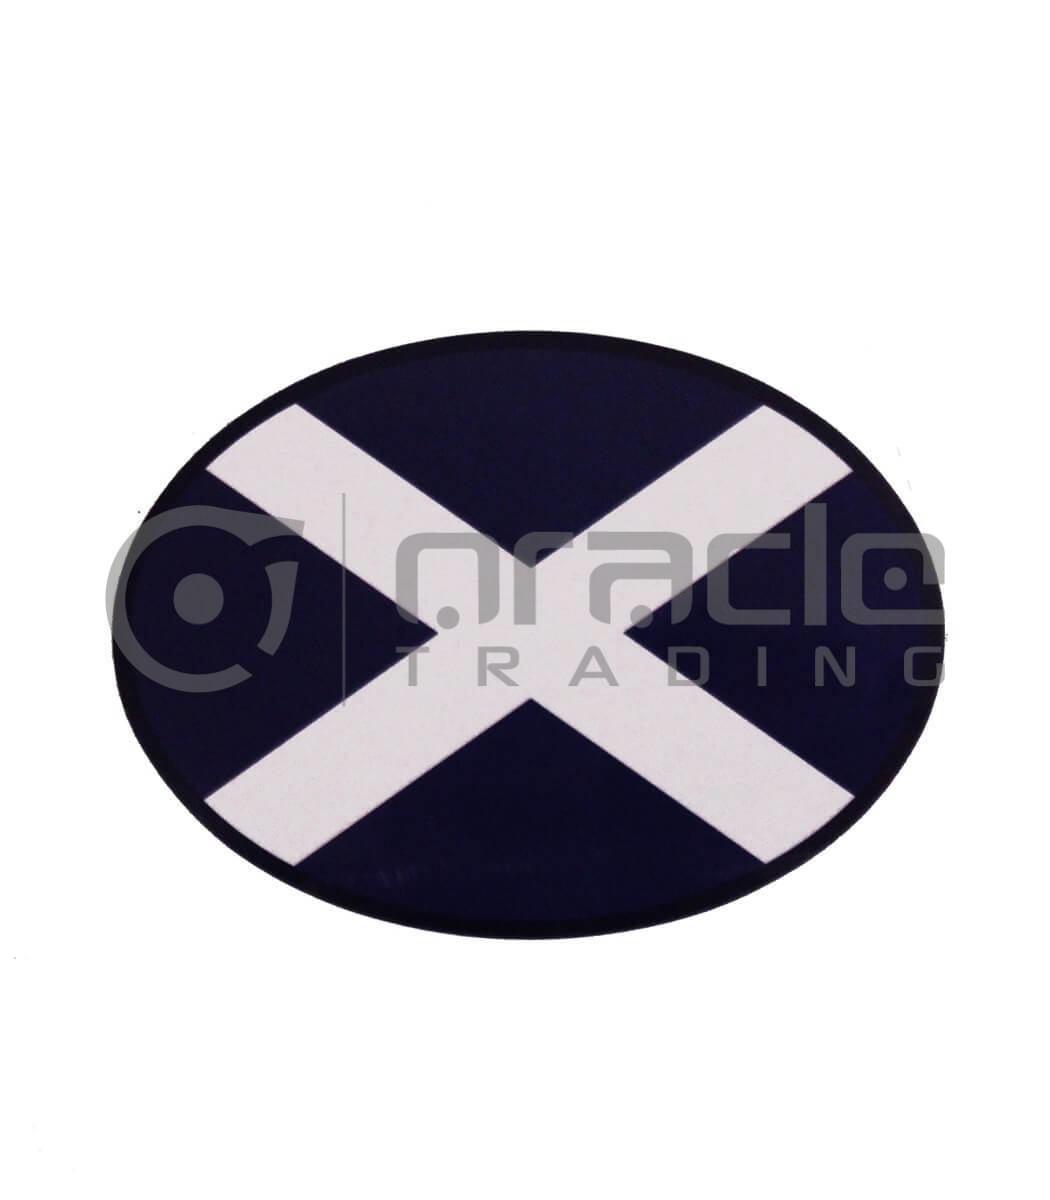 Scotland Oval Decal - Plain